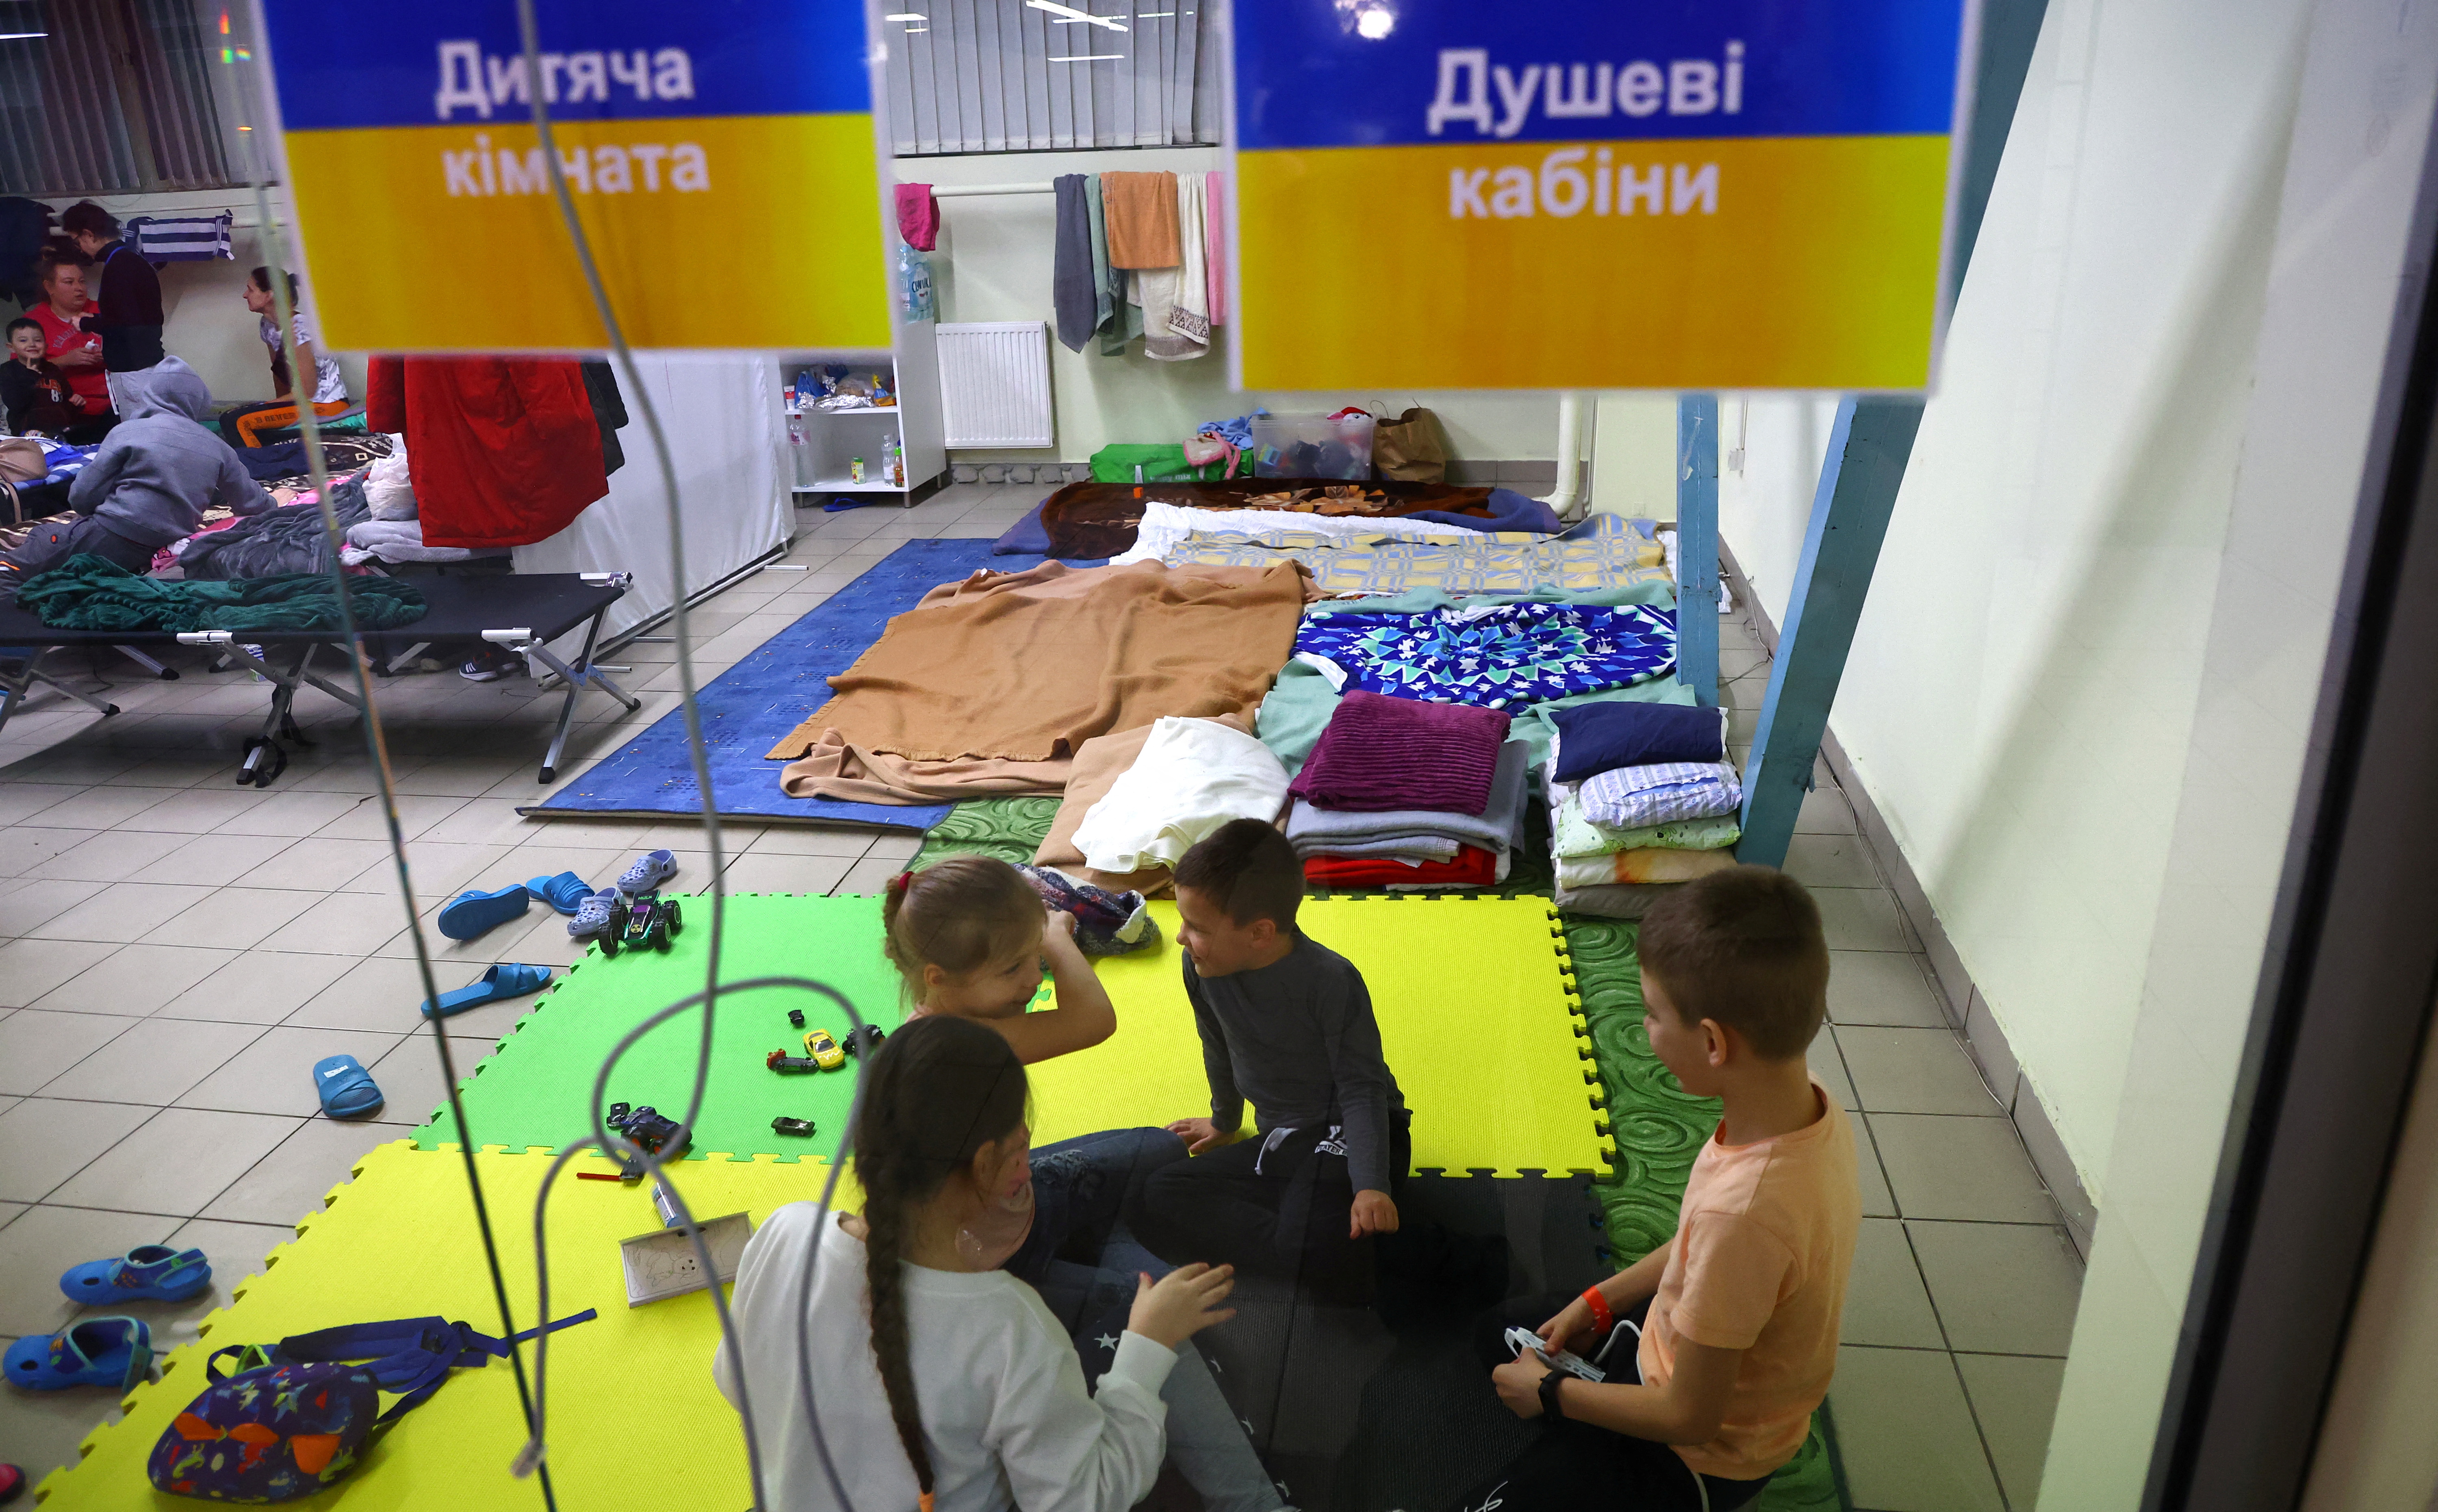 People flee Russia's invasion of Ukraine in Rzeszow